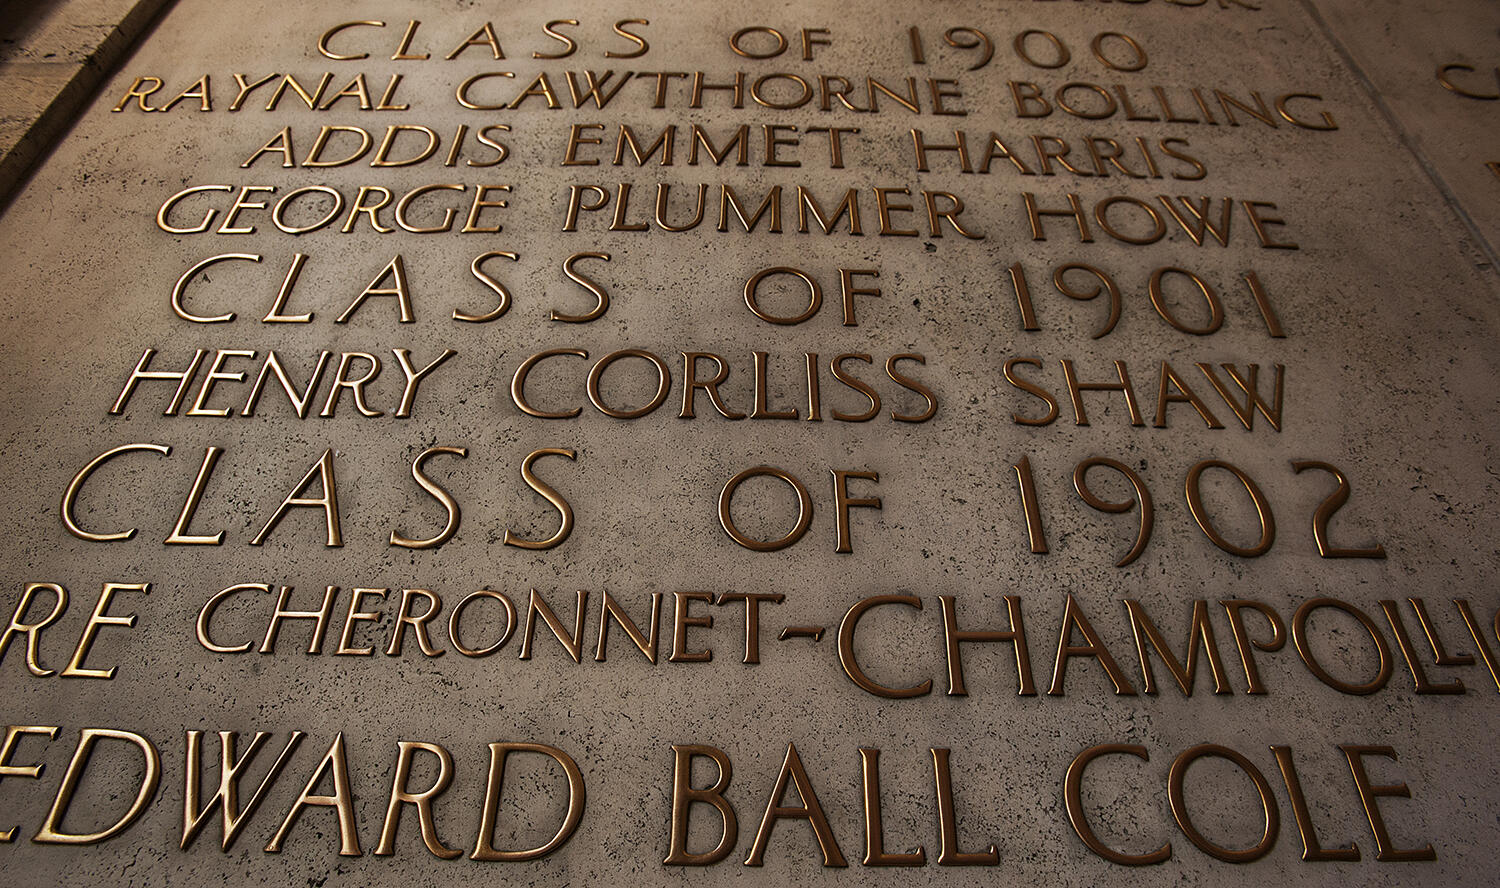 Names in the Memorial Room